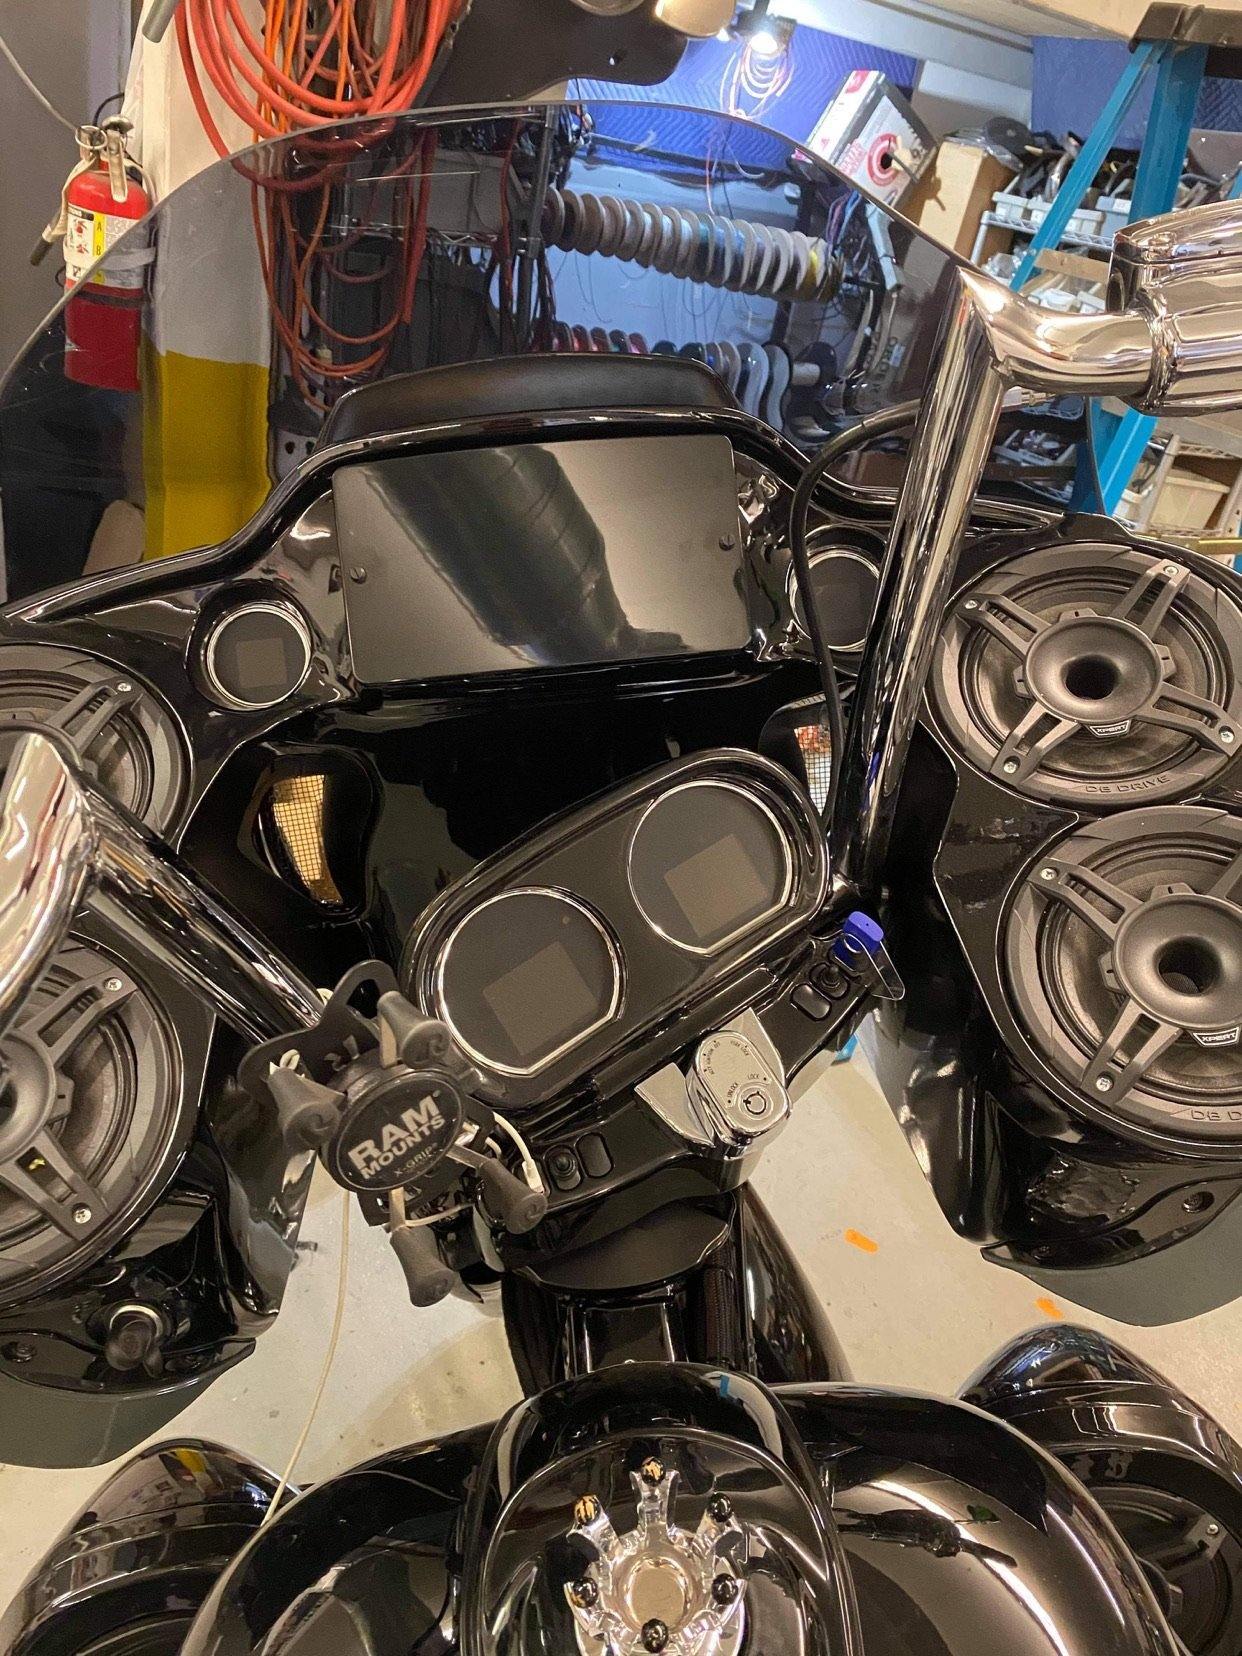 Speed Rings Radio Installation Parts Roadie Splash Covers for Harley Davidson